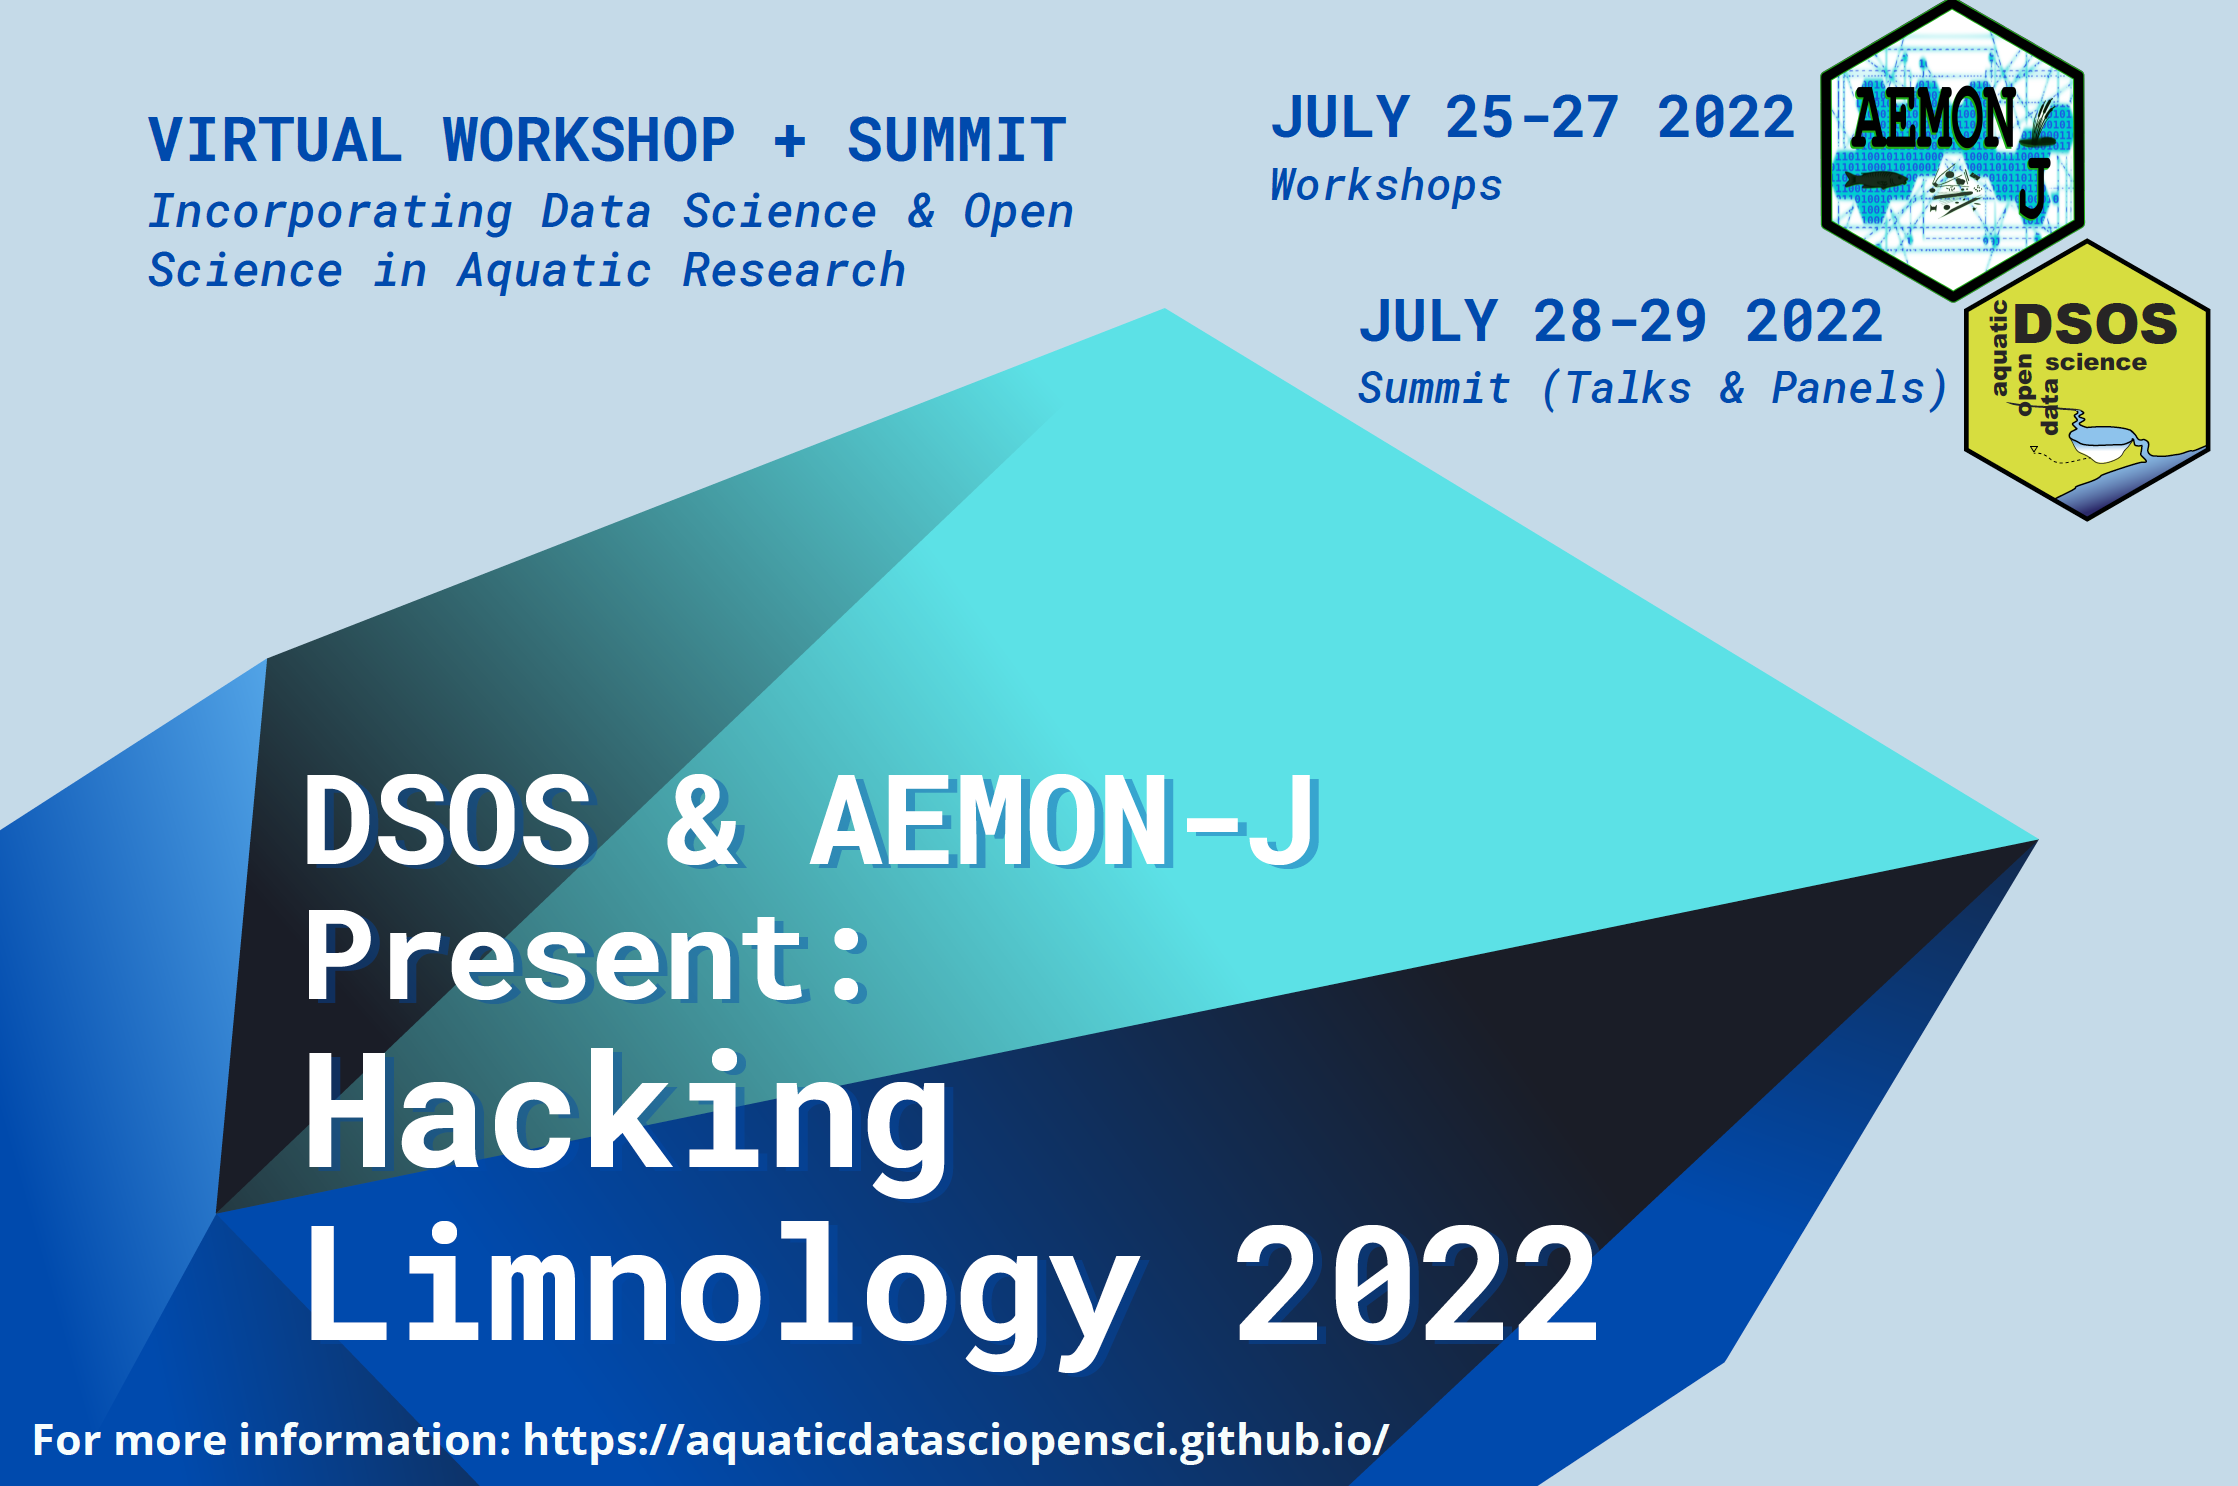 DSOS/AEMON-J virtual summit flyer